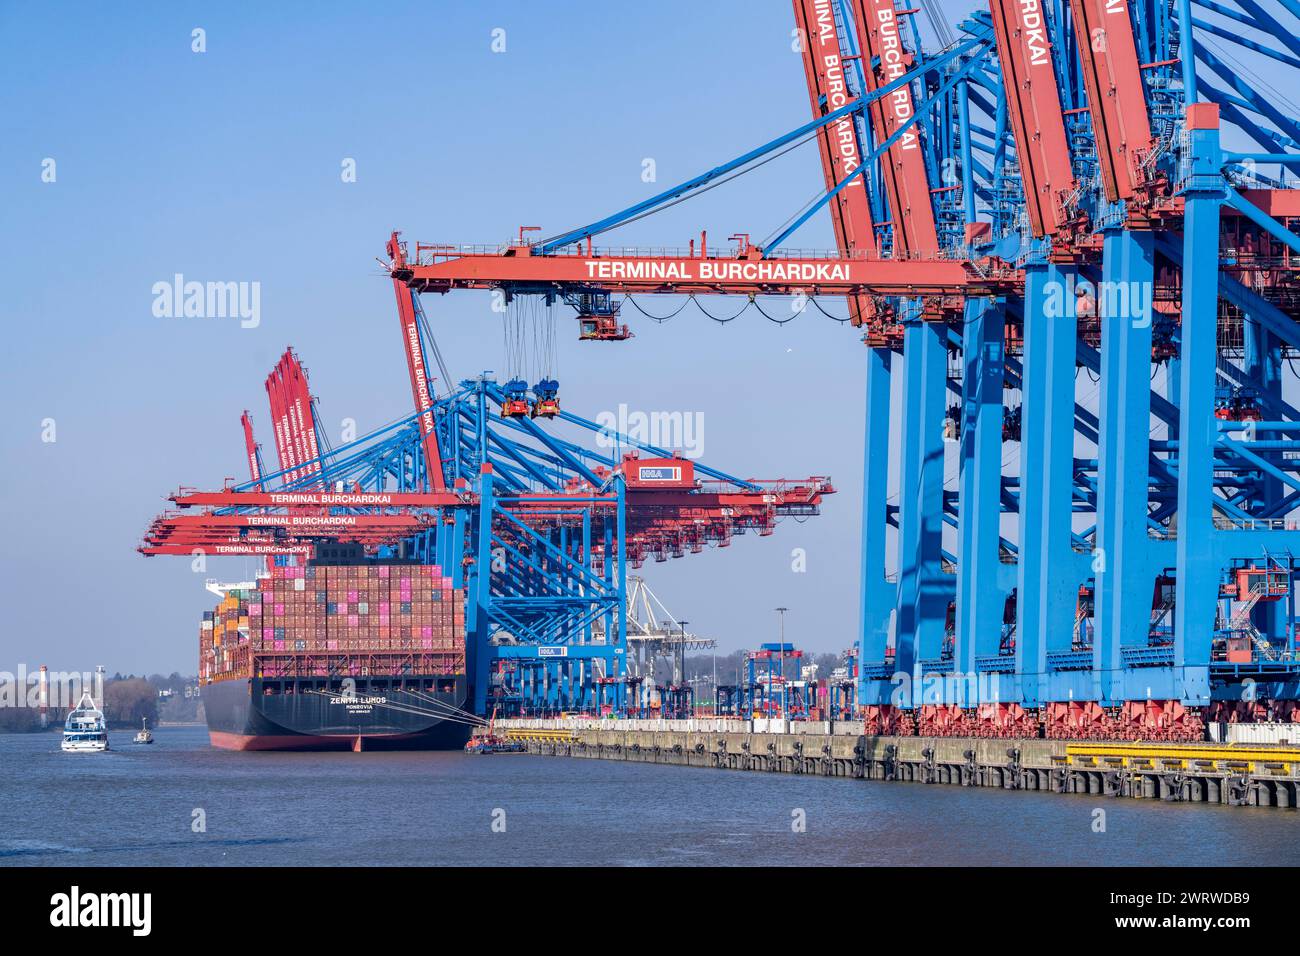 Porto di Amburgo, Waltershofer Hafen, HHLA Container Terminal Burchardkai, cargo container Zenith Lumos, Amburgo, Germania Foto Stock